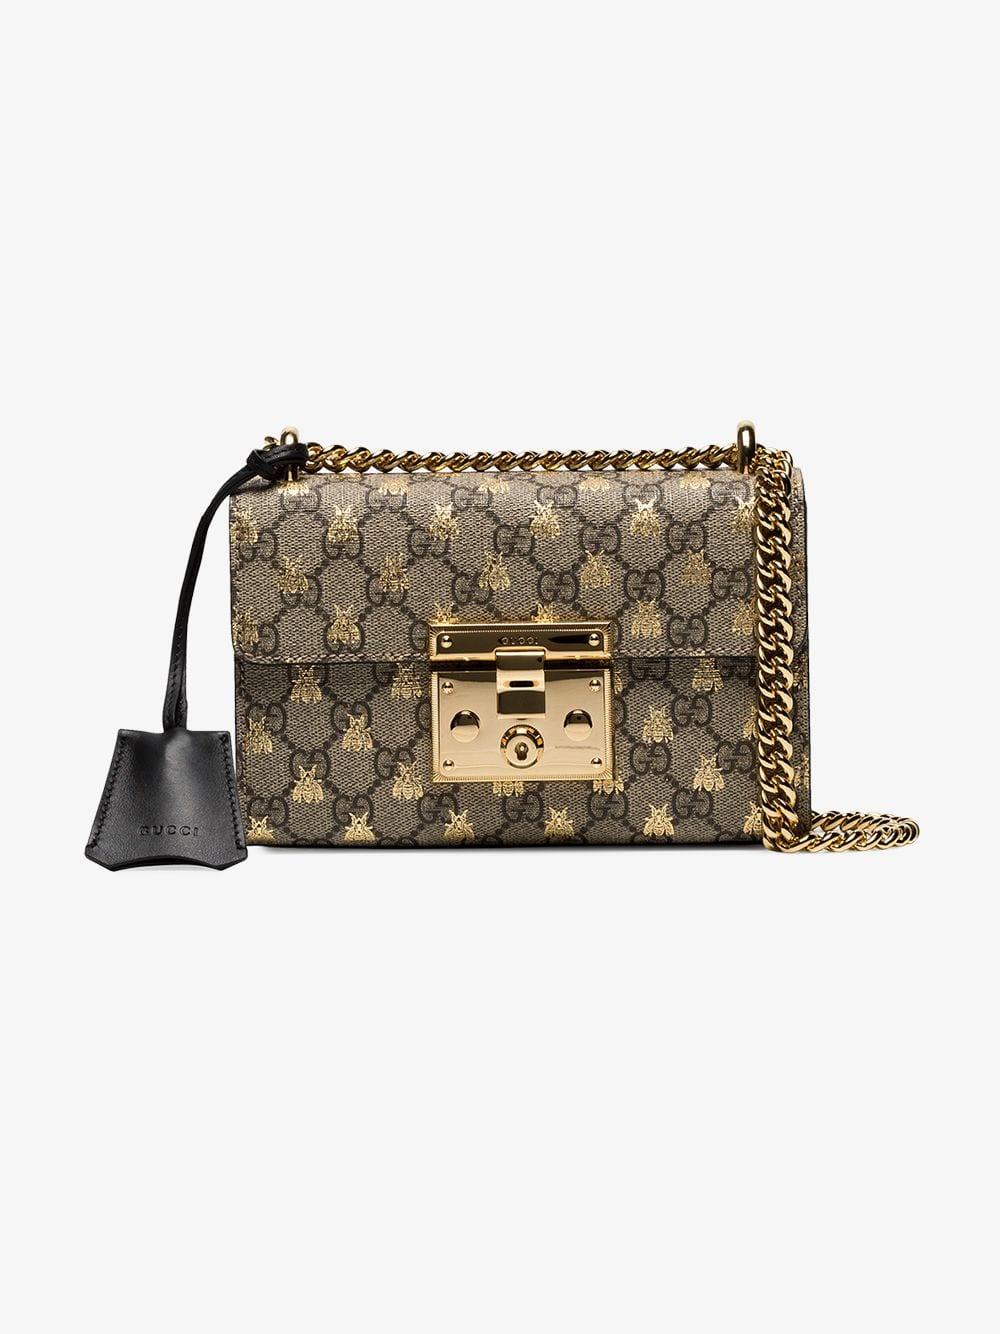 Lyst - Gucci Gold GG Bees Padlock Small Shoulder Bag